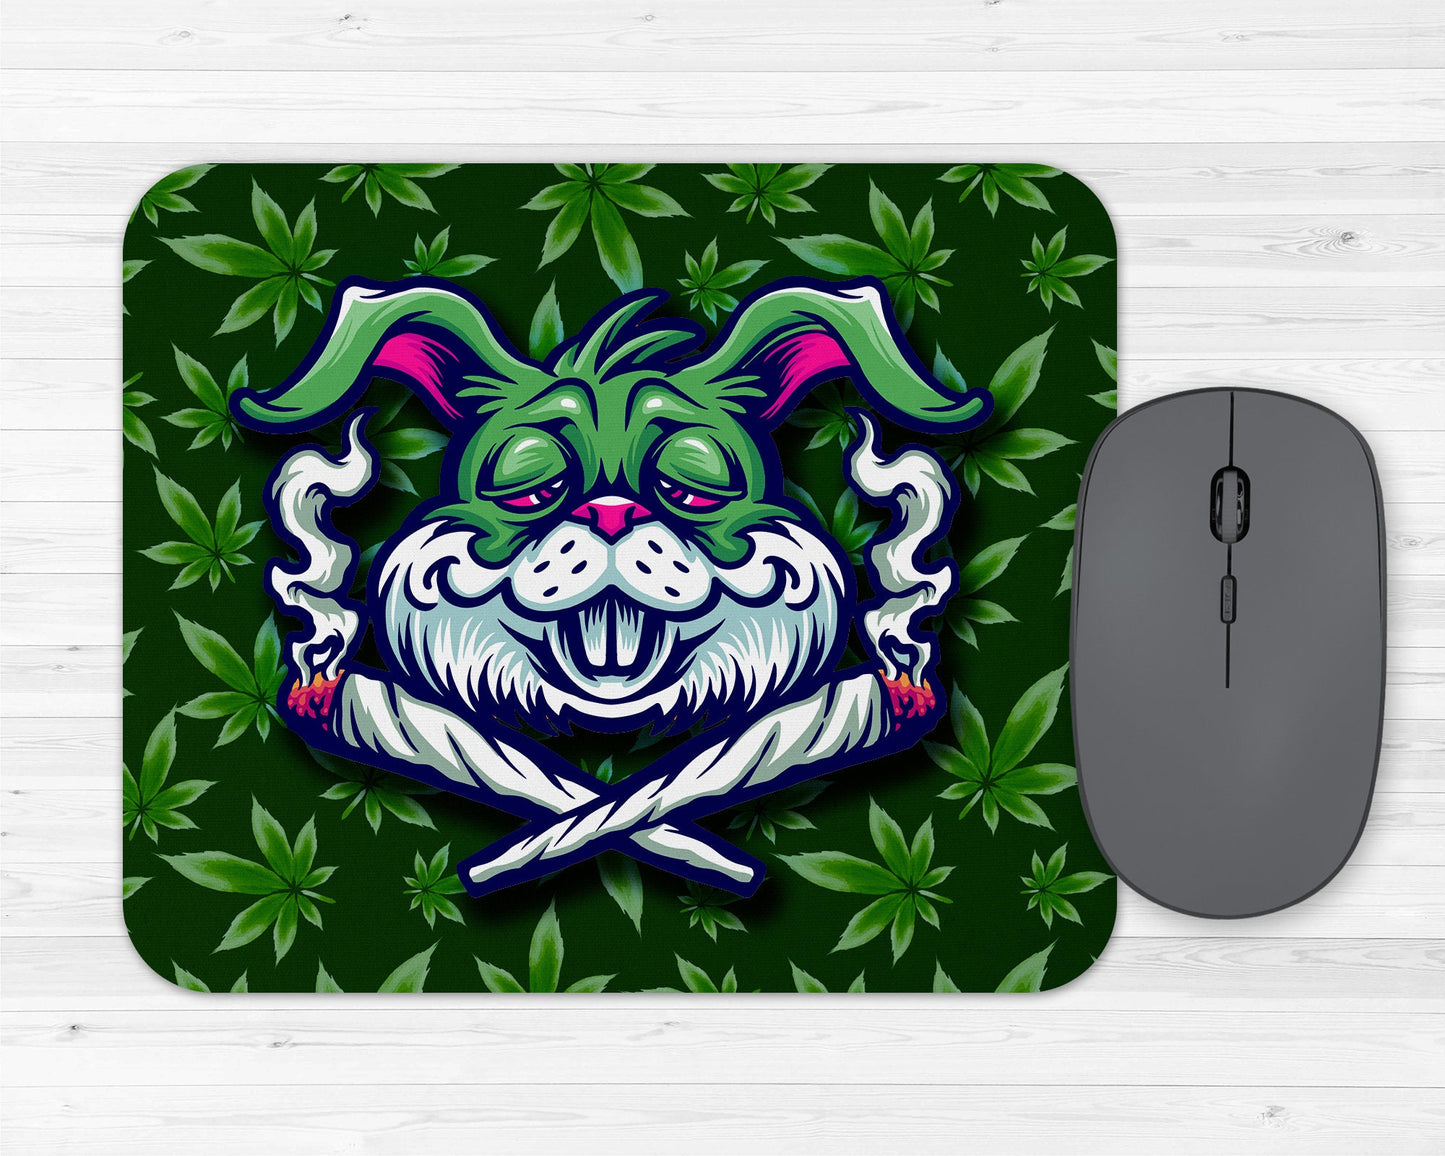 Stoner Art Pothead Cannabis Marijuana Rubber Mousepads - 10 Different Designs